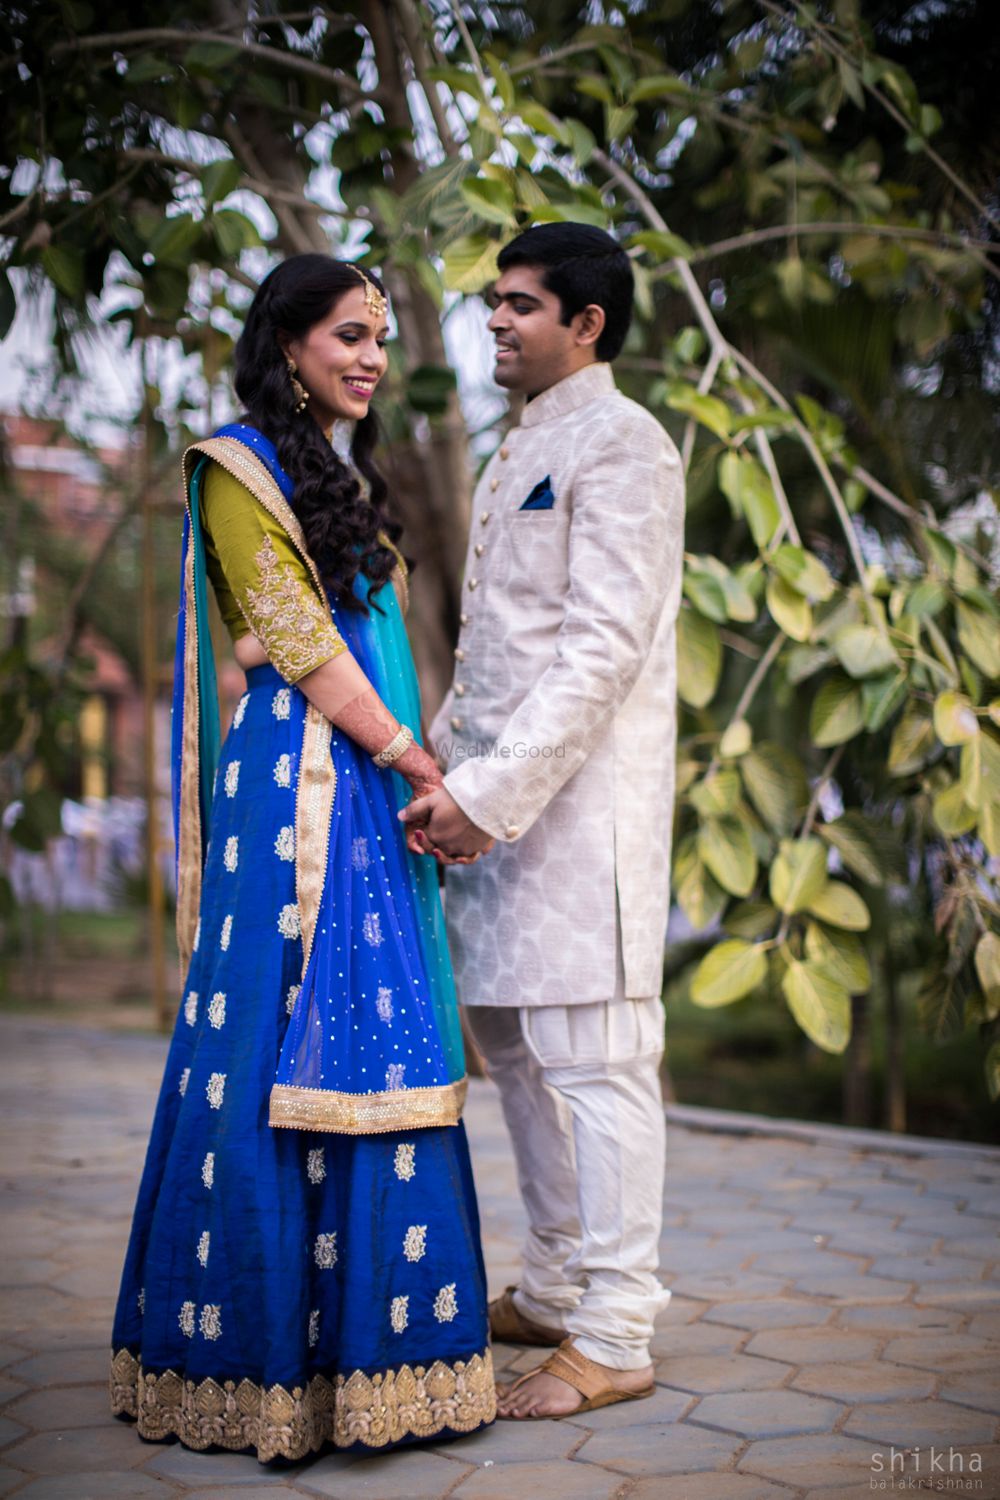 Photo From Couple portraits - By Shikha Balakrishnan Photography